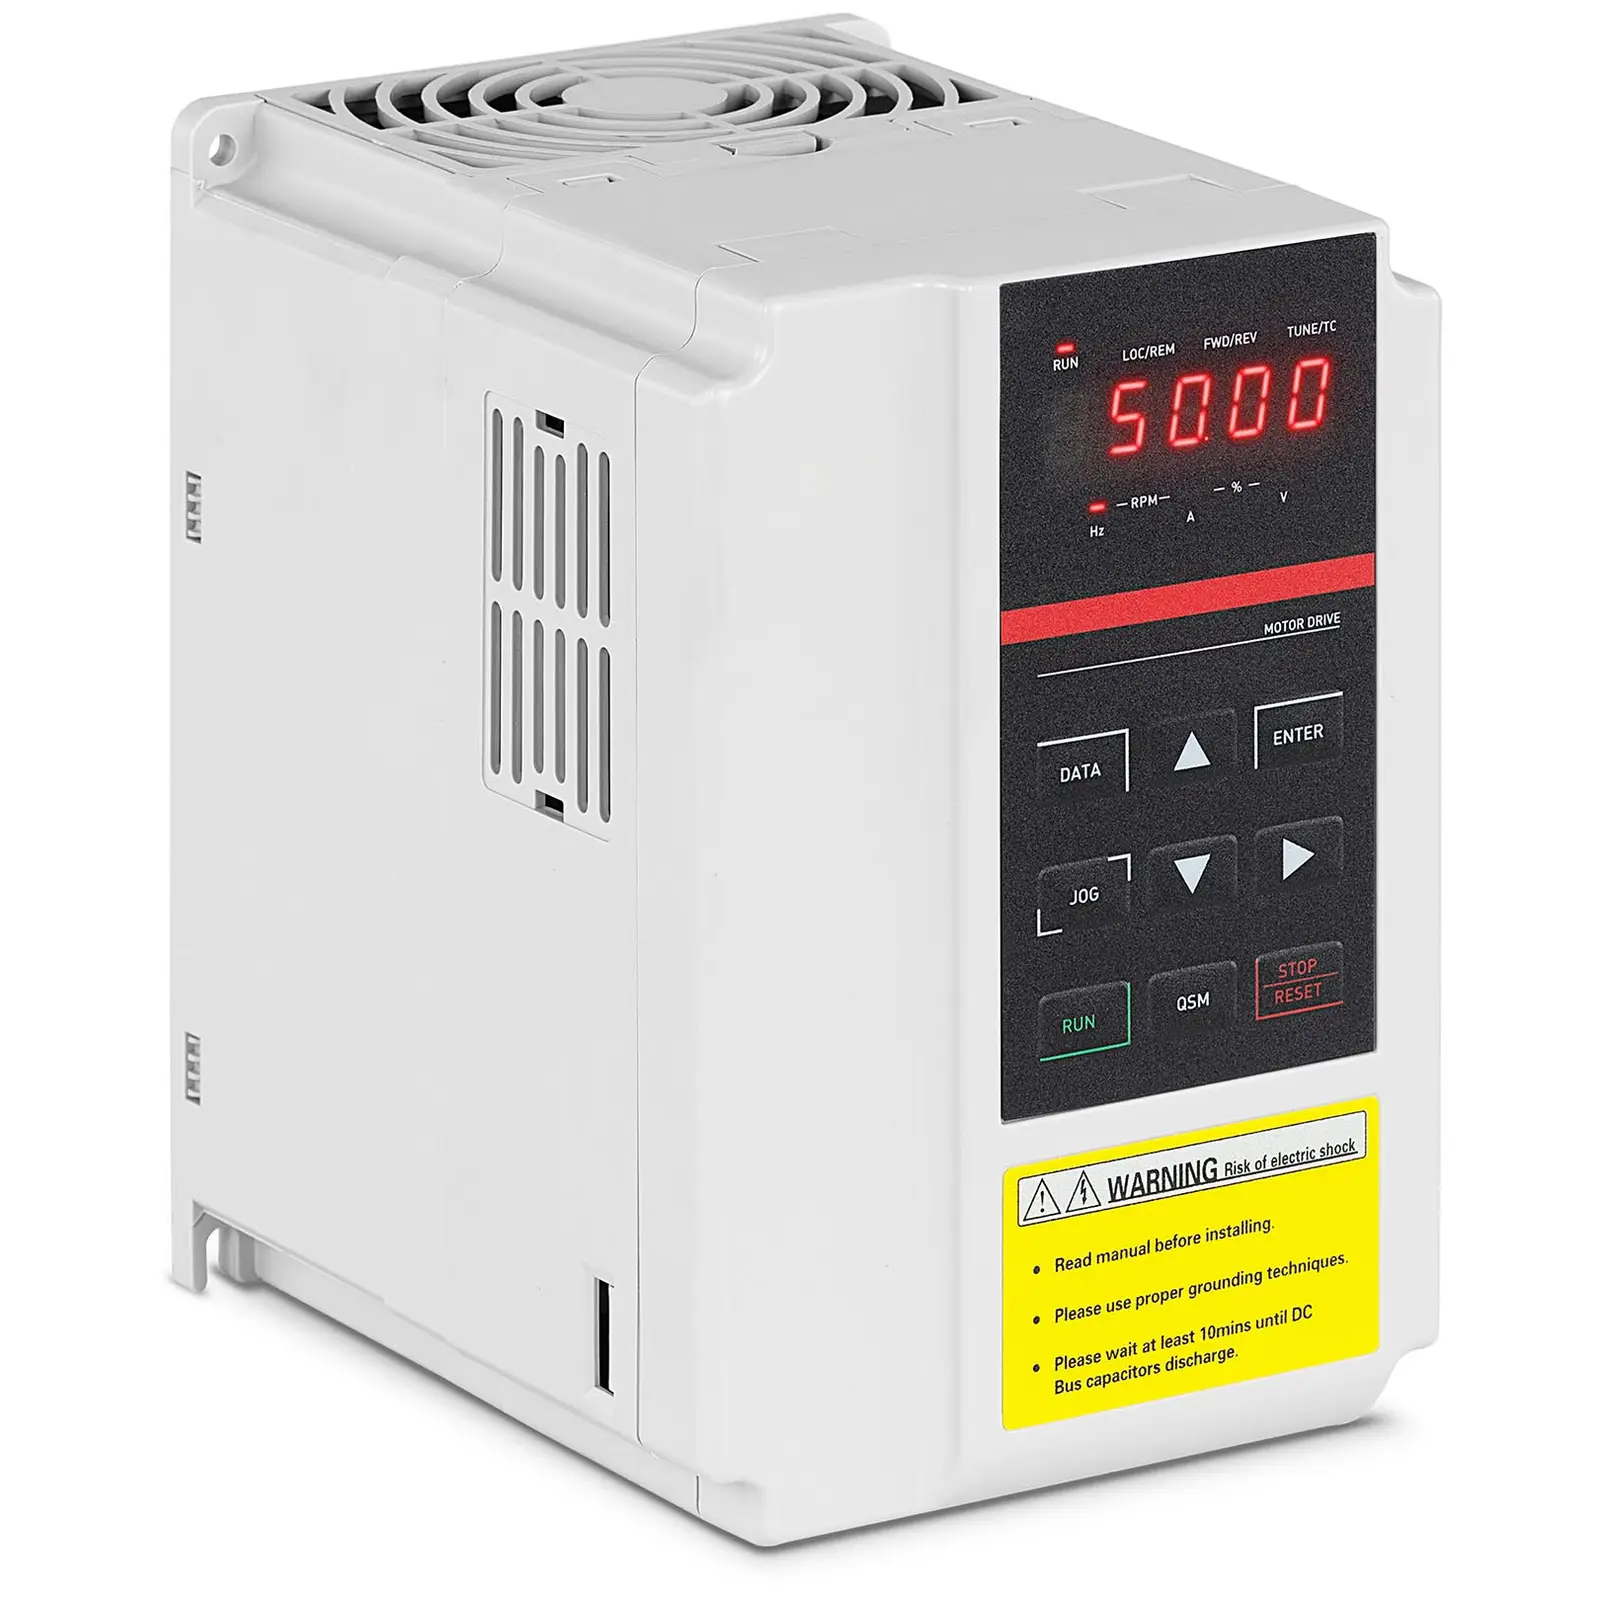 Convertitore di frequenza - 1,5 kW / 2 CV - 380 V - 50-60 Hz - LED